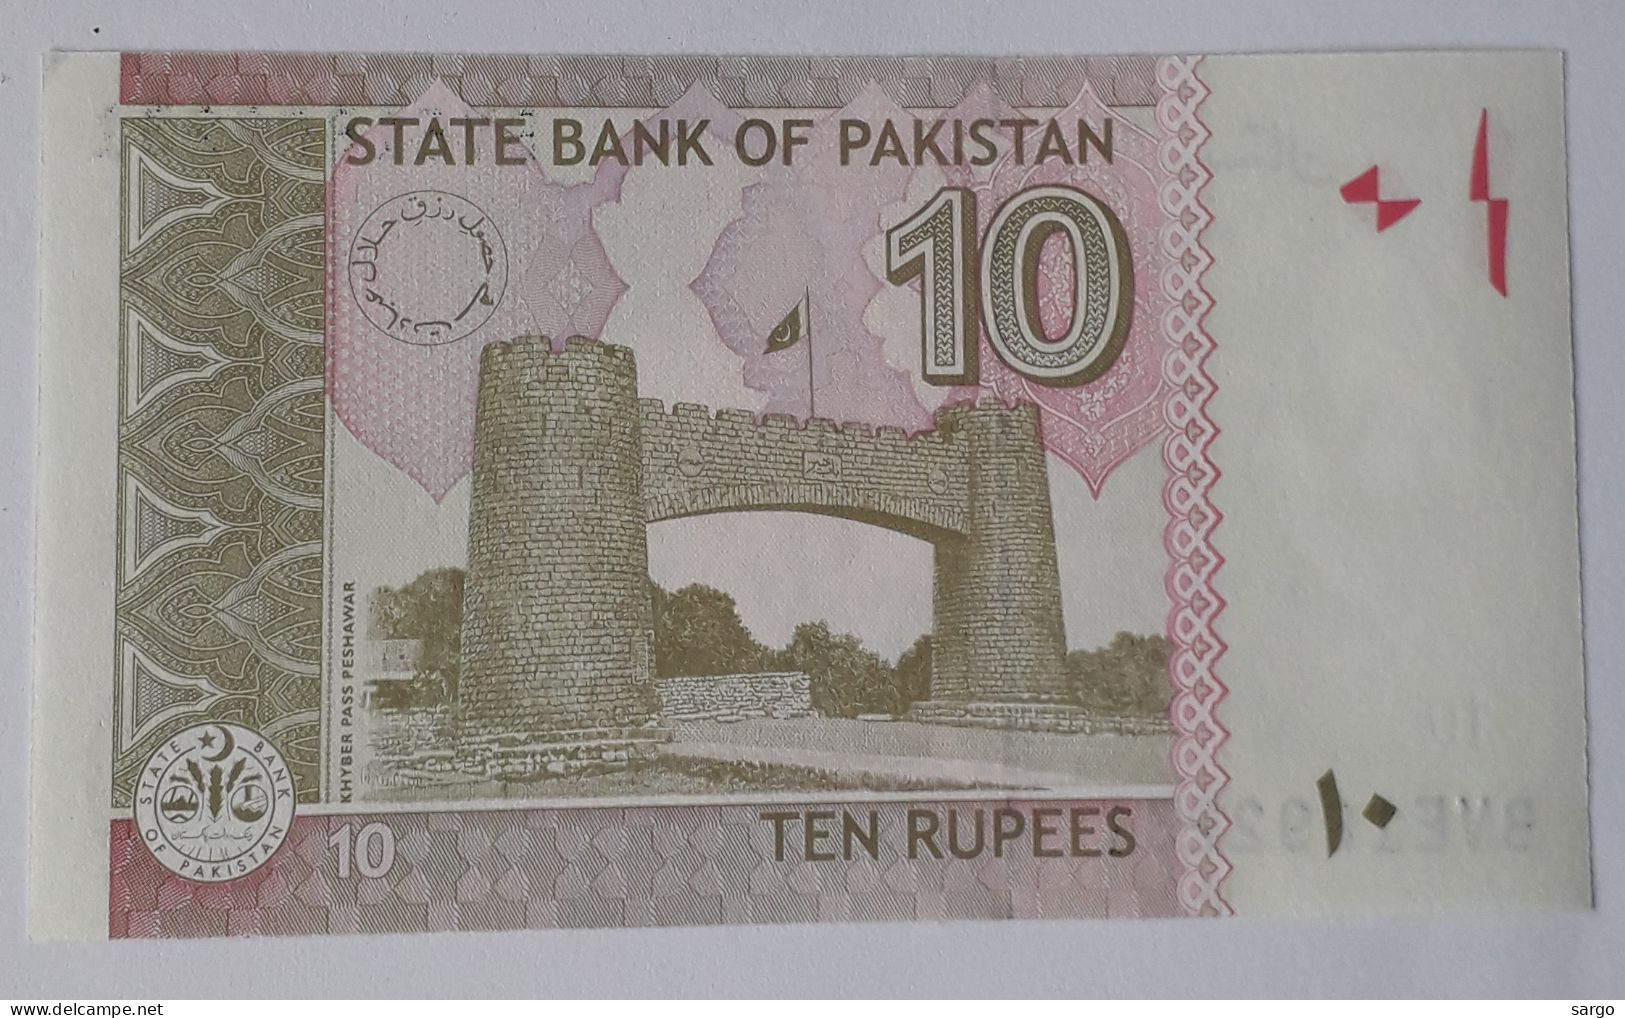 PAKISTAN - 10 RUPEES  - P 45  - 2021 - UNC - BANKNOTES - PAPER MONEY - CARTAMONETA - - Pakistán